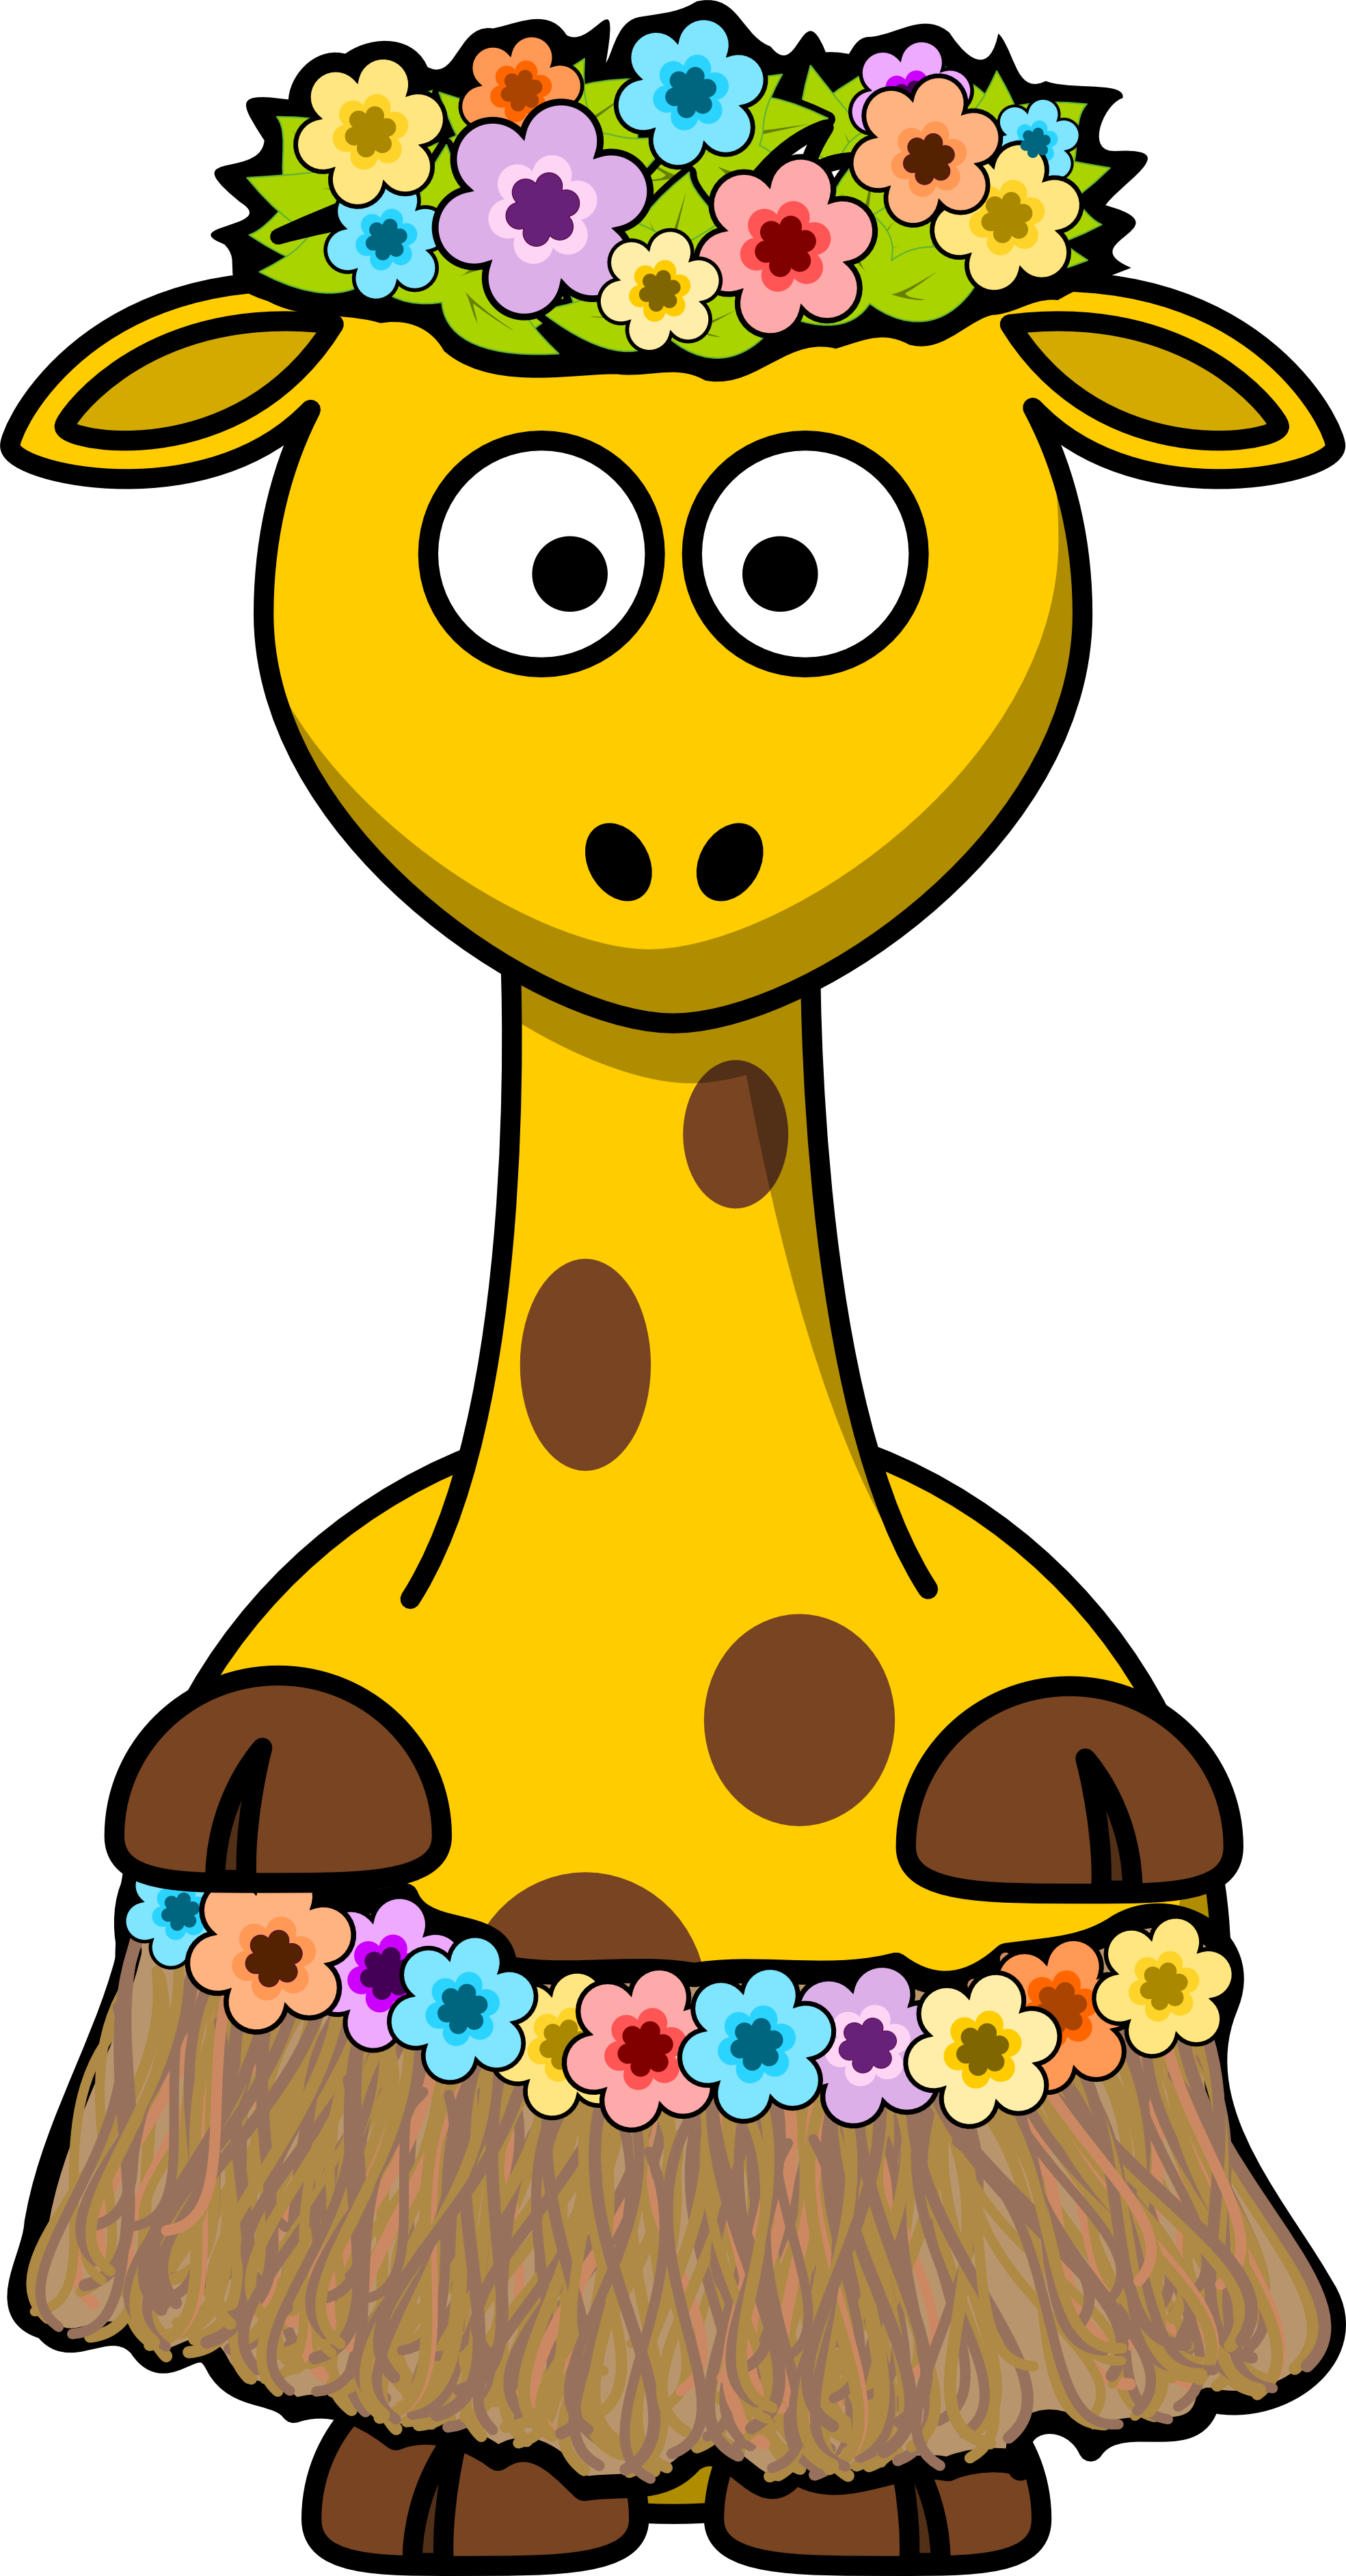 clipart giraffe dancing